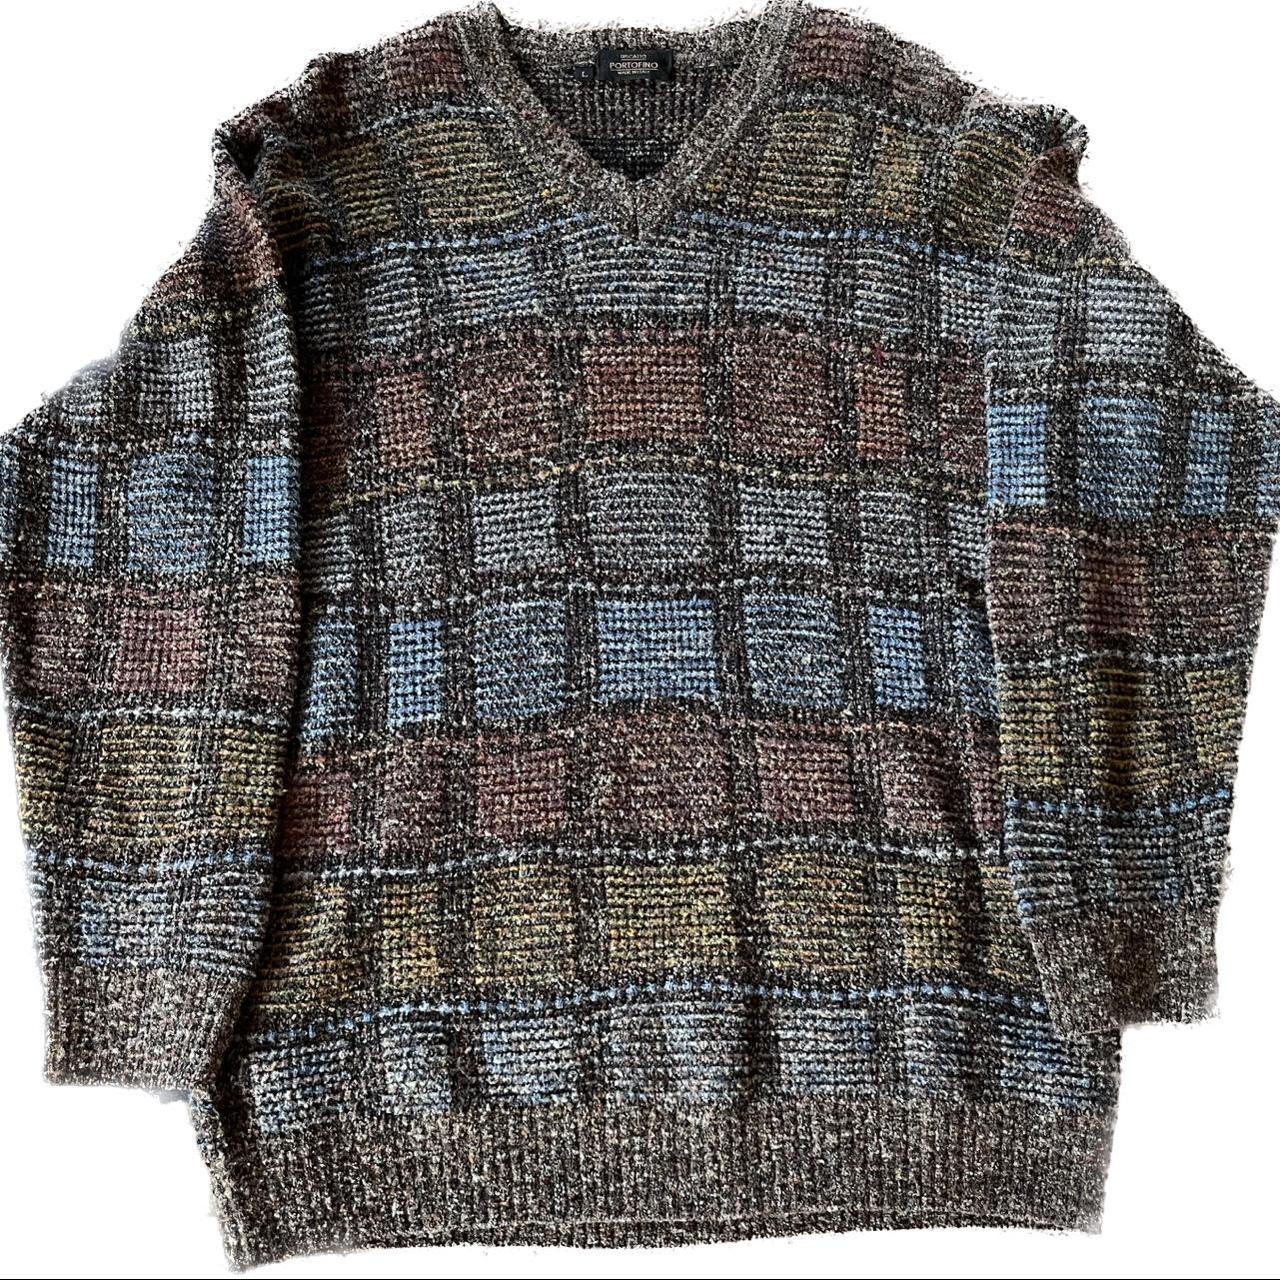 RISCATTO PORTOFINO made in Italy Sweater hole on one... - Depop